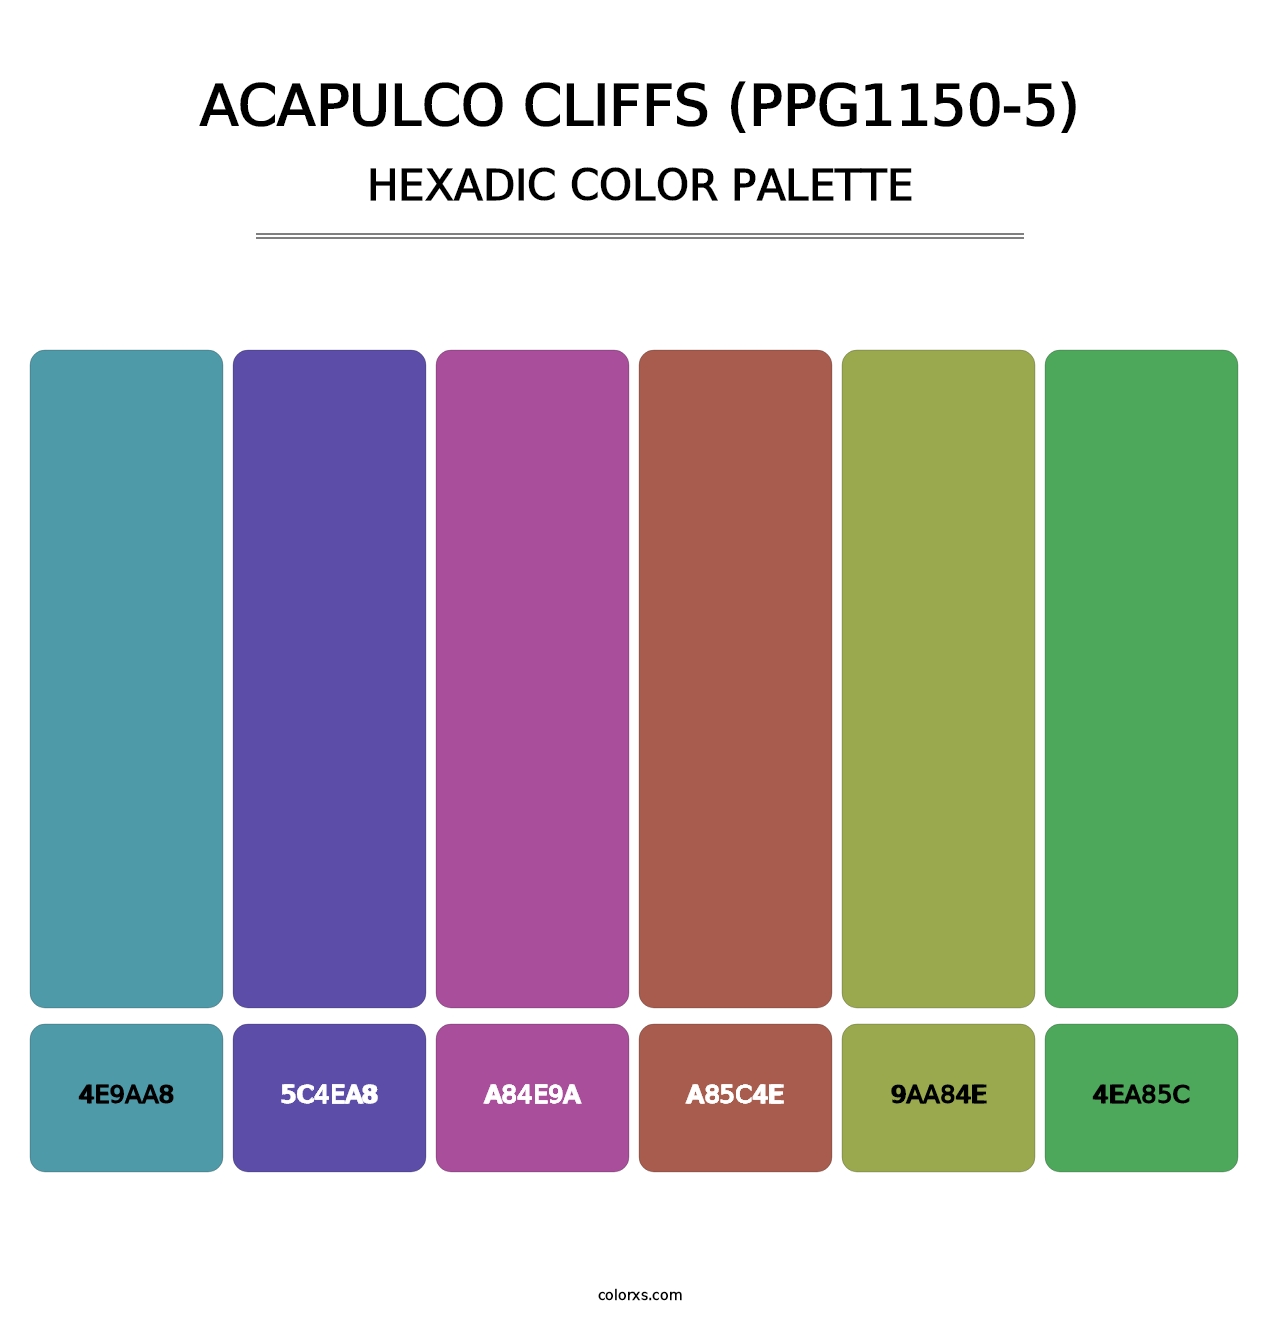 Acapulco Cliffs (PPG1150-5) - Hexadic Color Palette